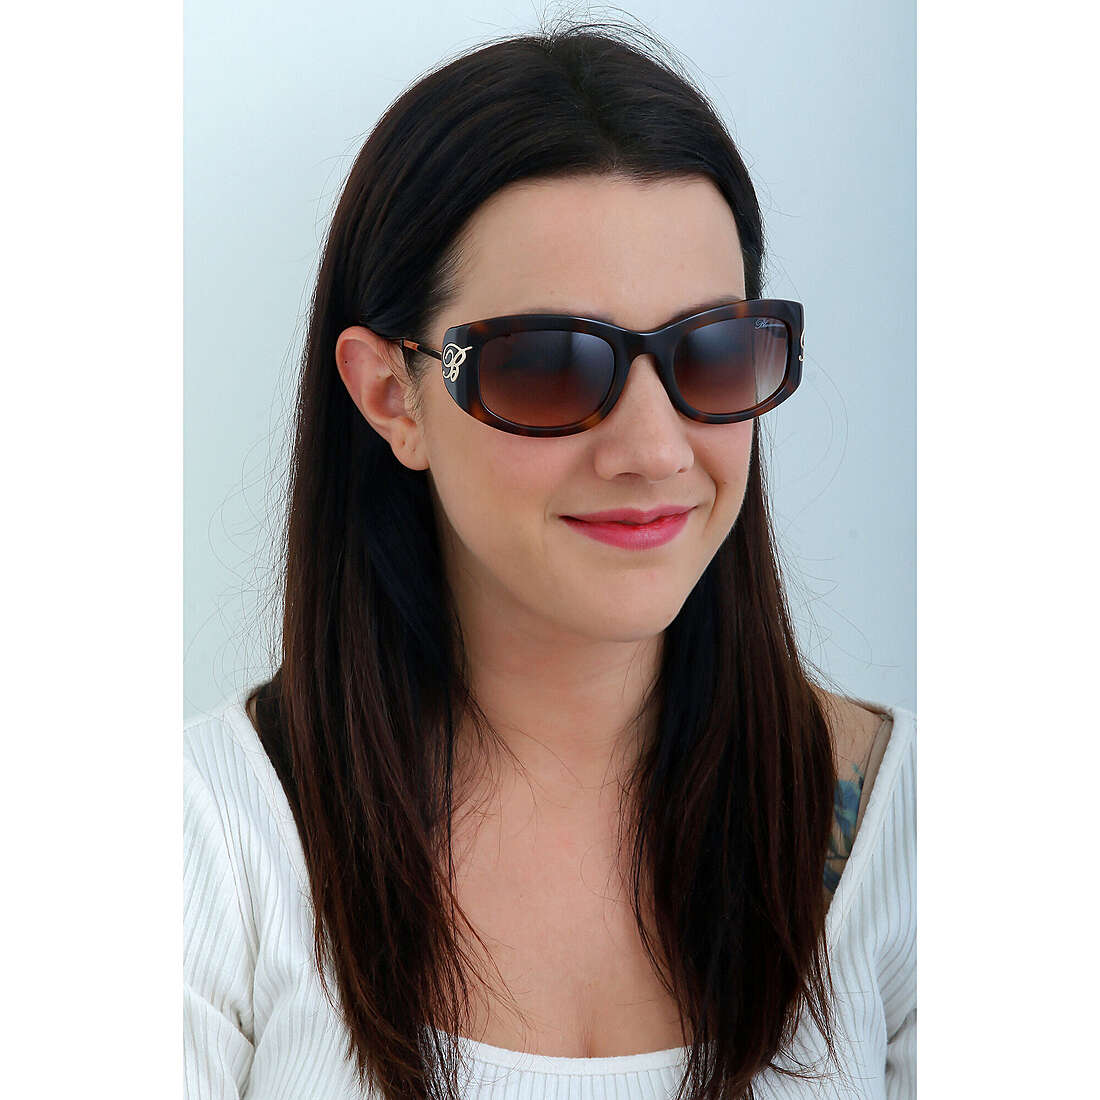 Blumarine occhiali da sole donna SBM7790752 indosso